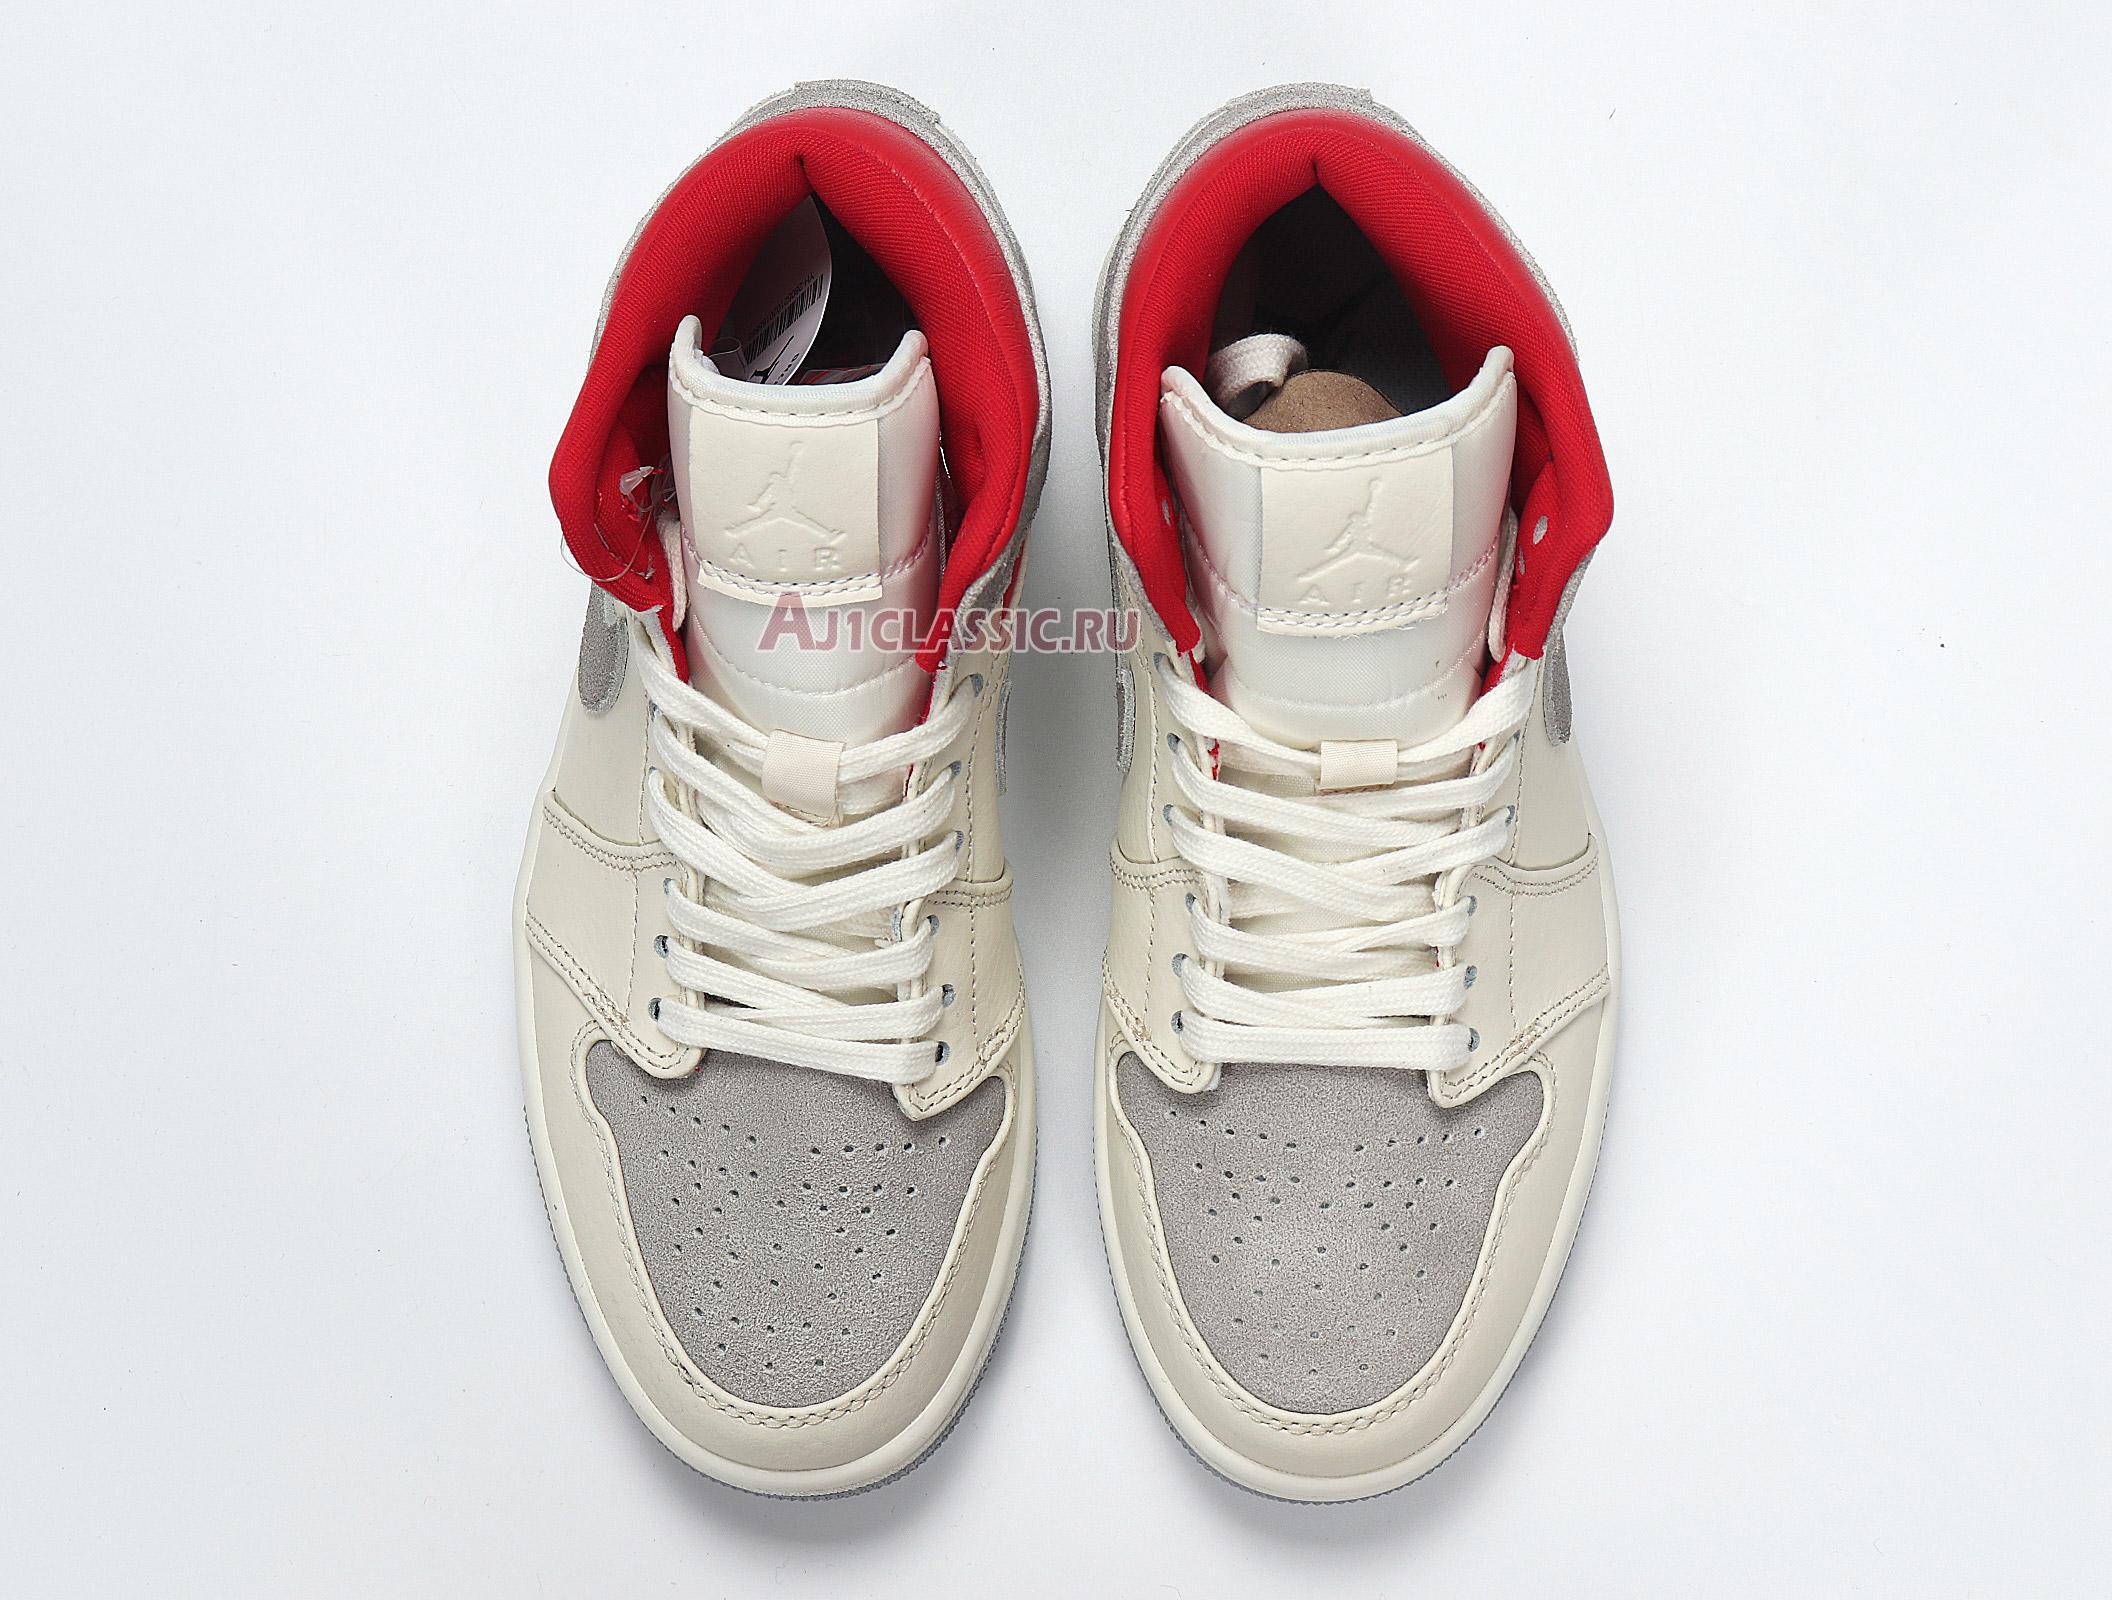 Sneakersnstuff x Air Jordan 1 Mid "Past Present Future" CT3443-100